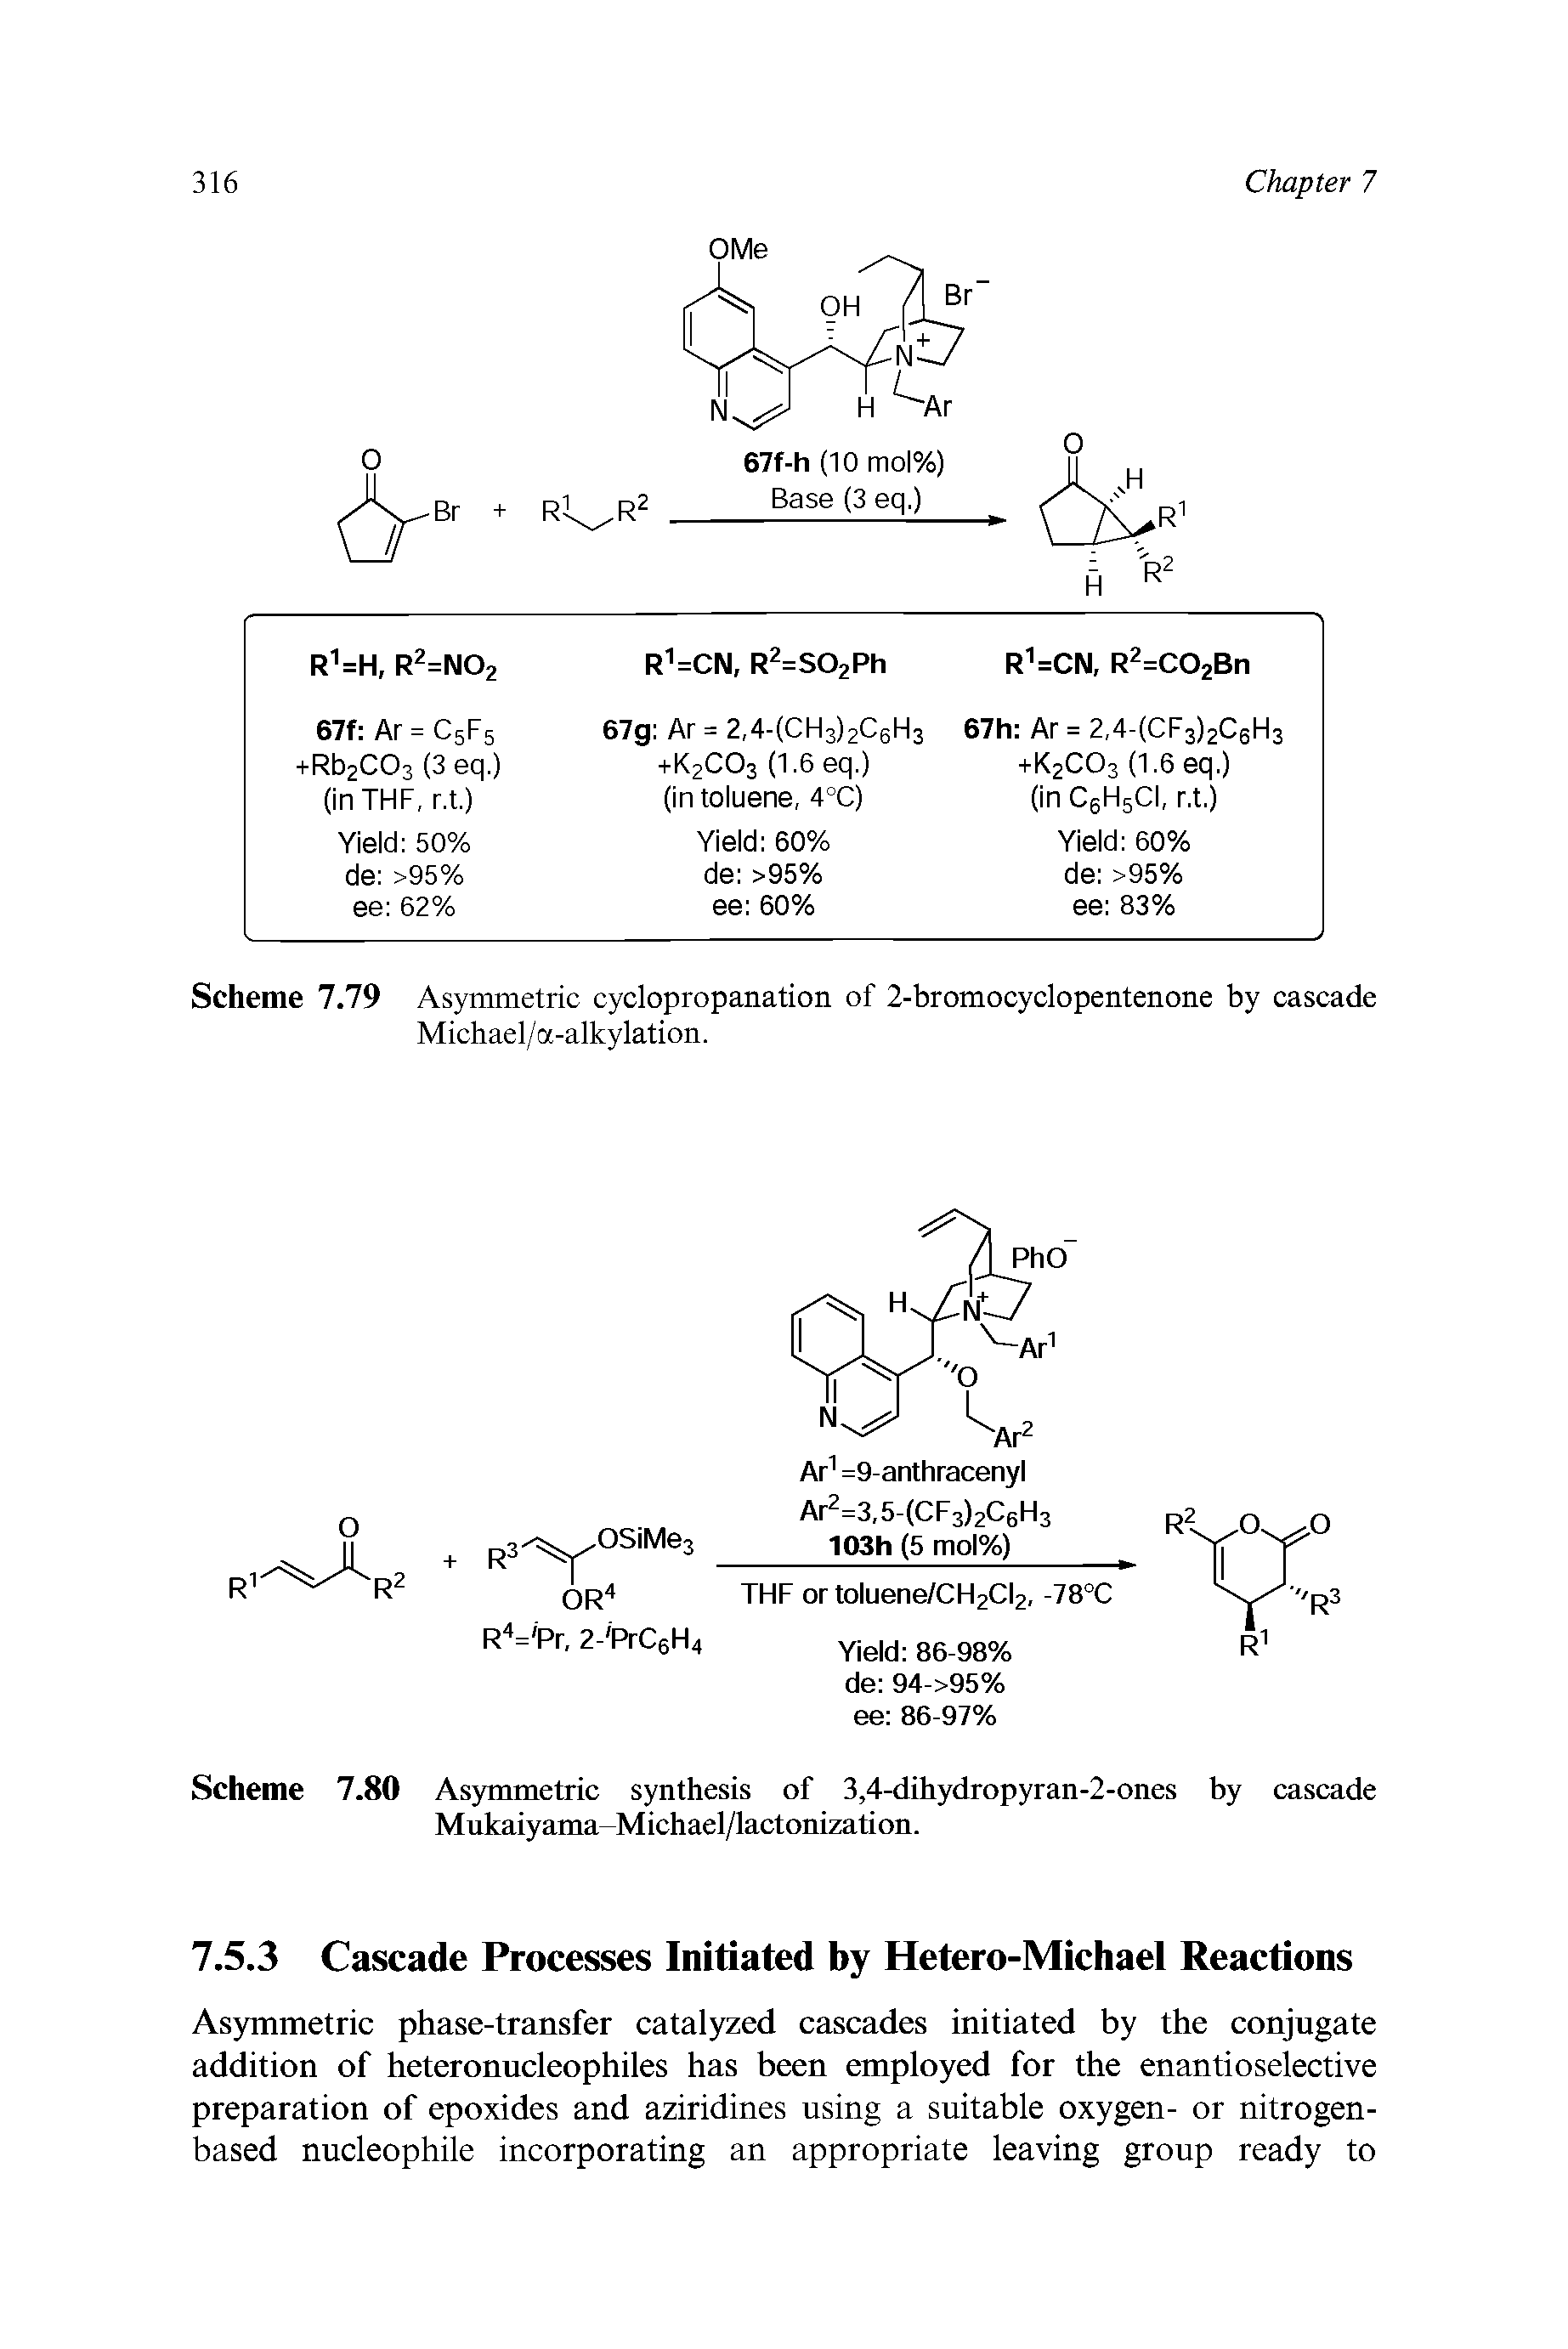 Scheme 7.79 Asymmetric cyclopropanation of 2-bromocyclopentenone by cascade Michael/a-alkylation.